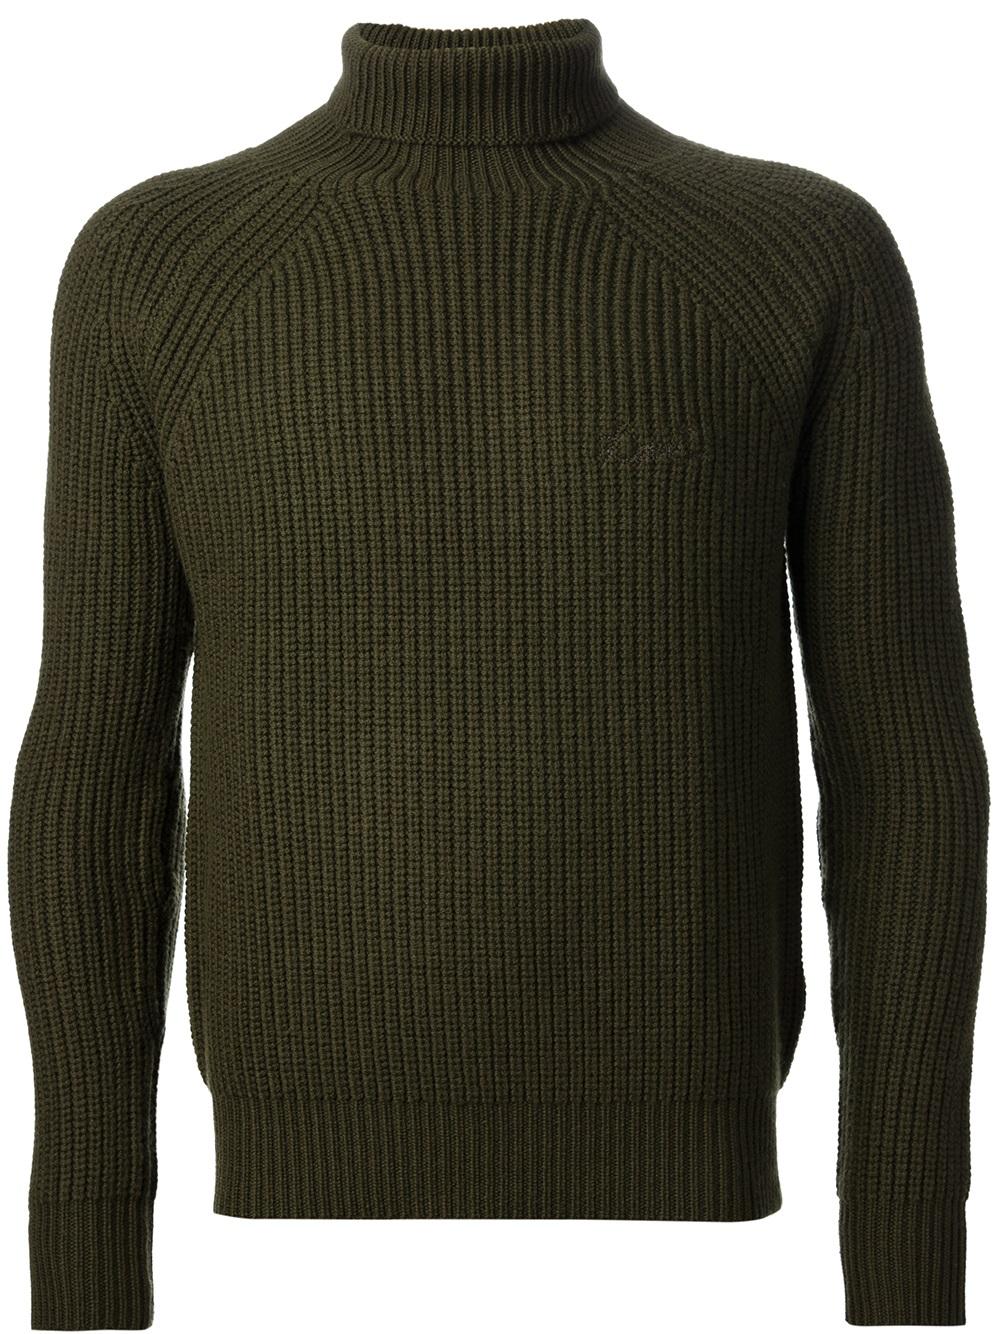 Lyst - Golden Goose Deluxe Brand Turtleneck Sweater in Green for Men